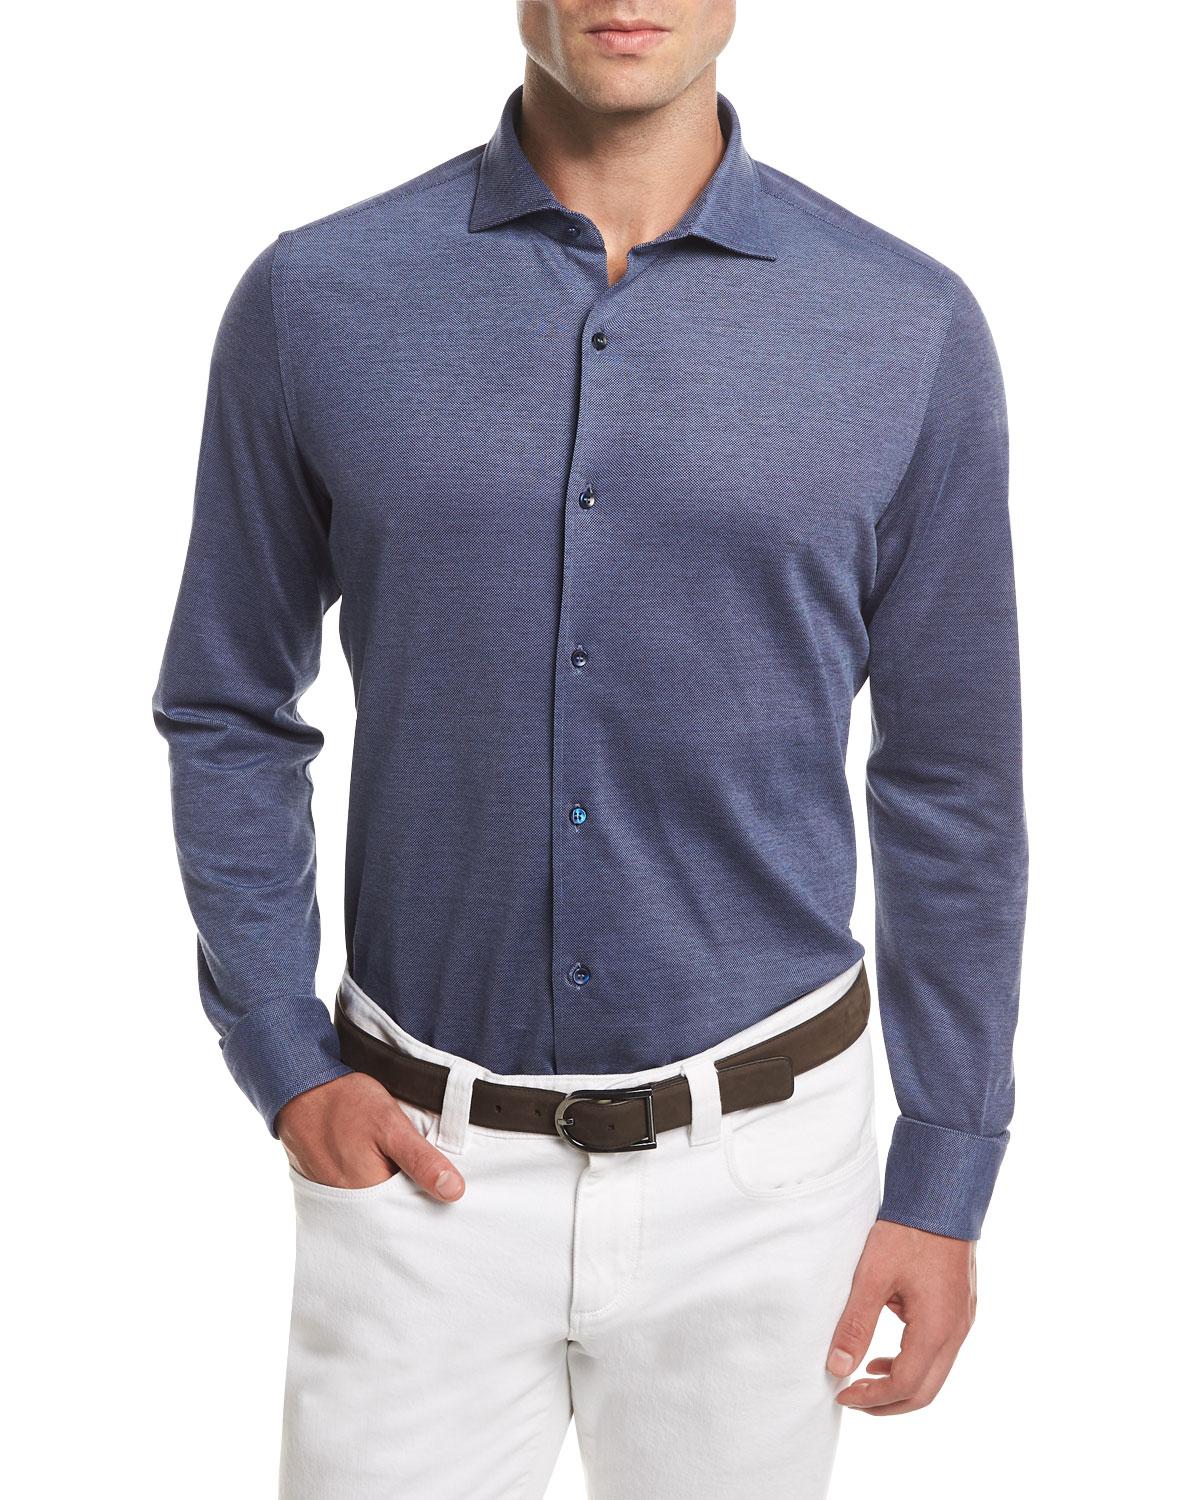 Lyst - Loro Piana Woven Cotton Oxford Sport Shirt in Blue for Men